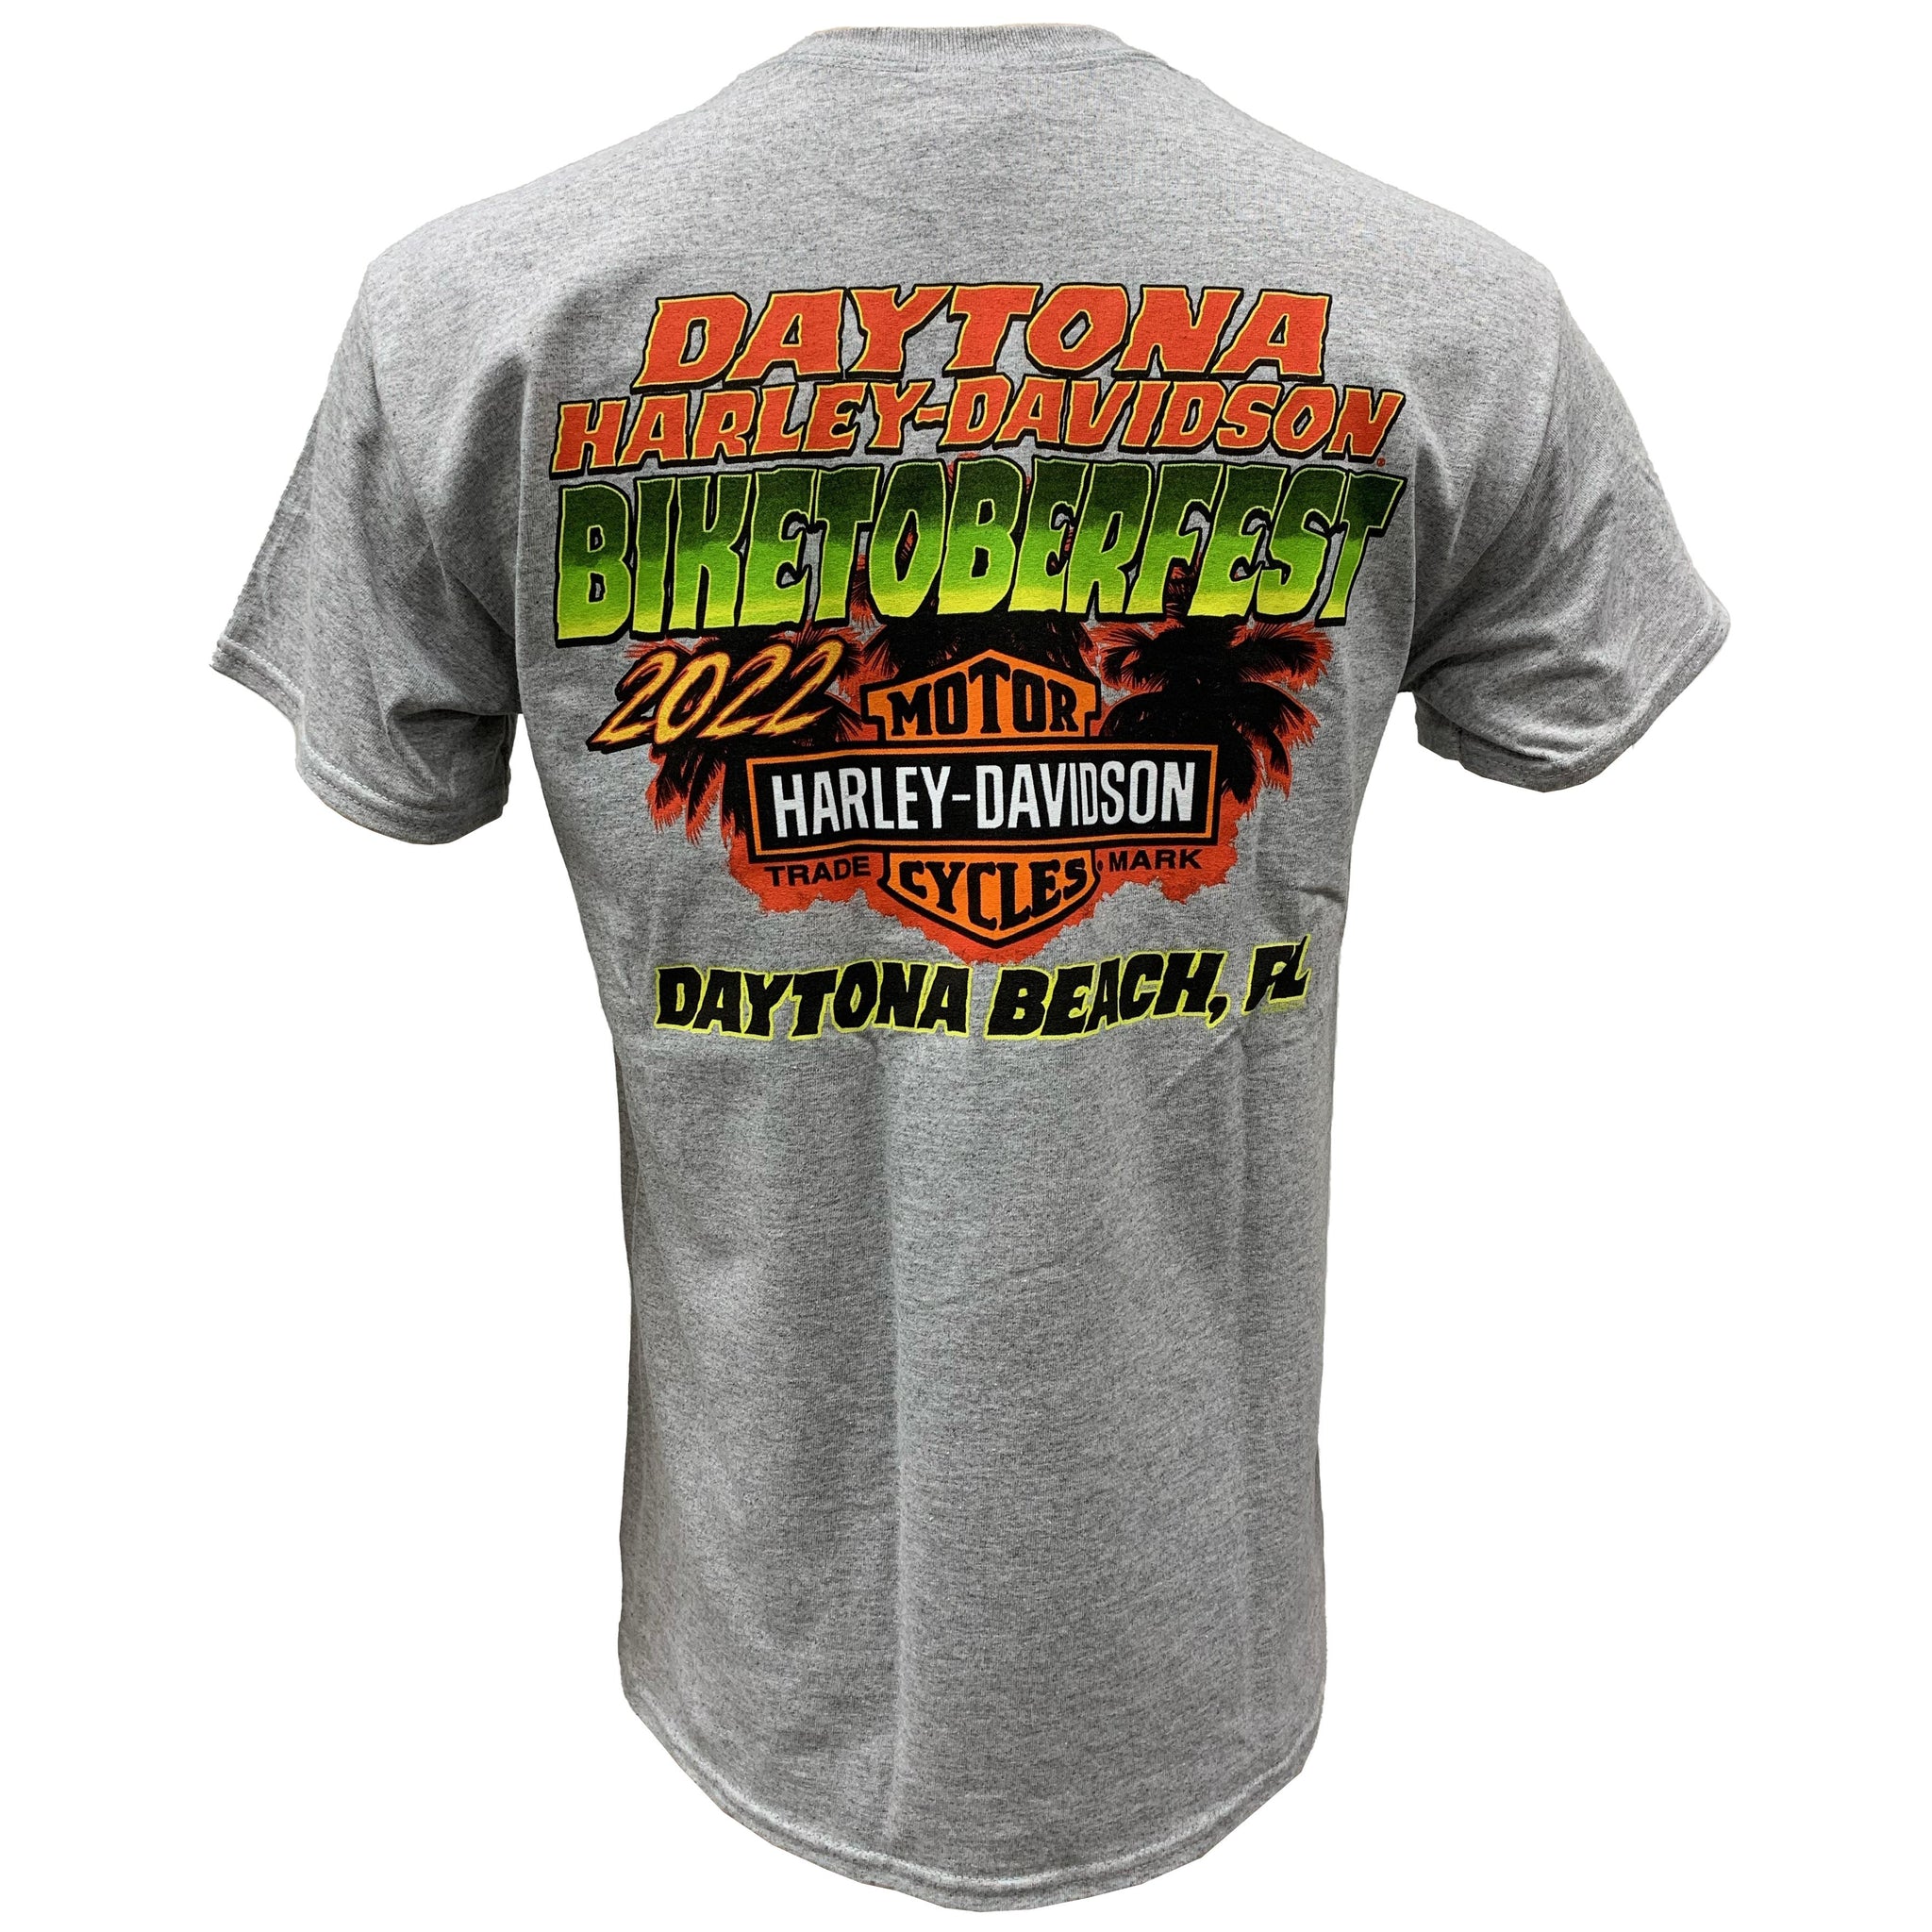 Biketoberfest 2022 Men's Rat Fink Gator Heather Gray S/S Shirt – Daytona  Harley-Davidson